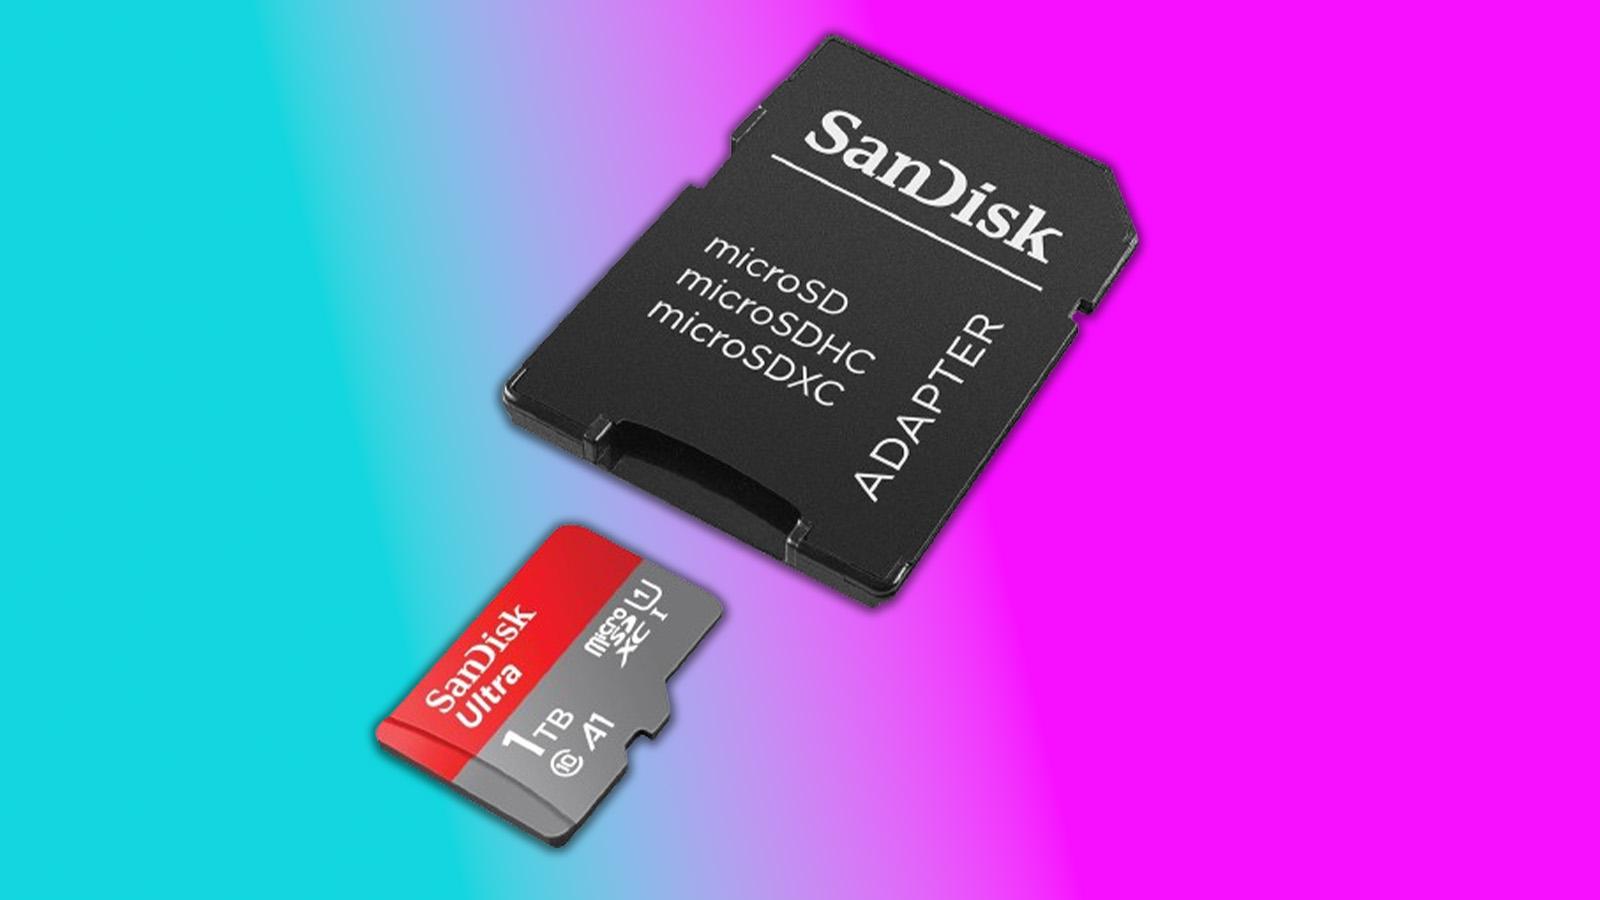 Sandisk1tb micro SD card